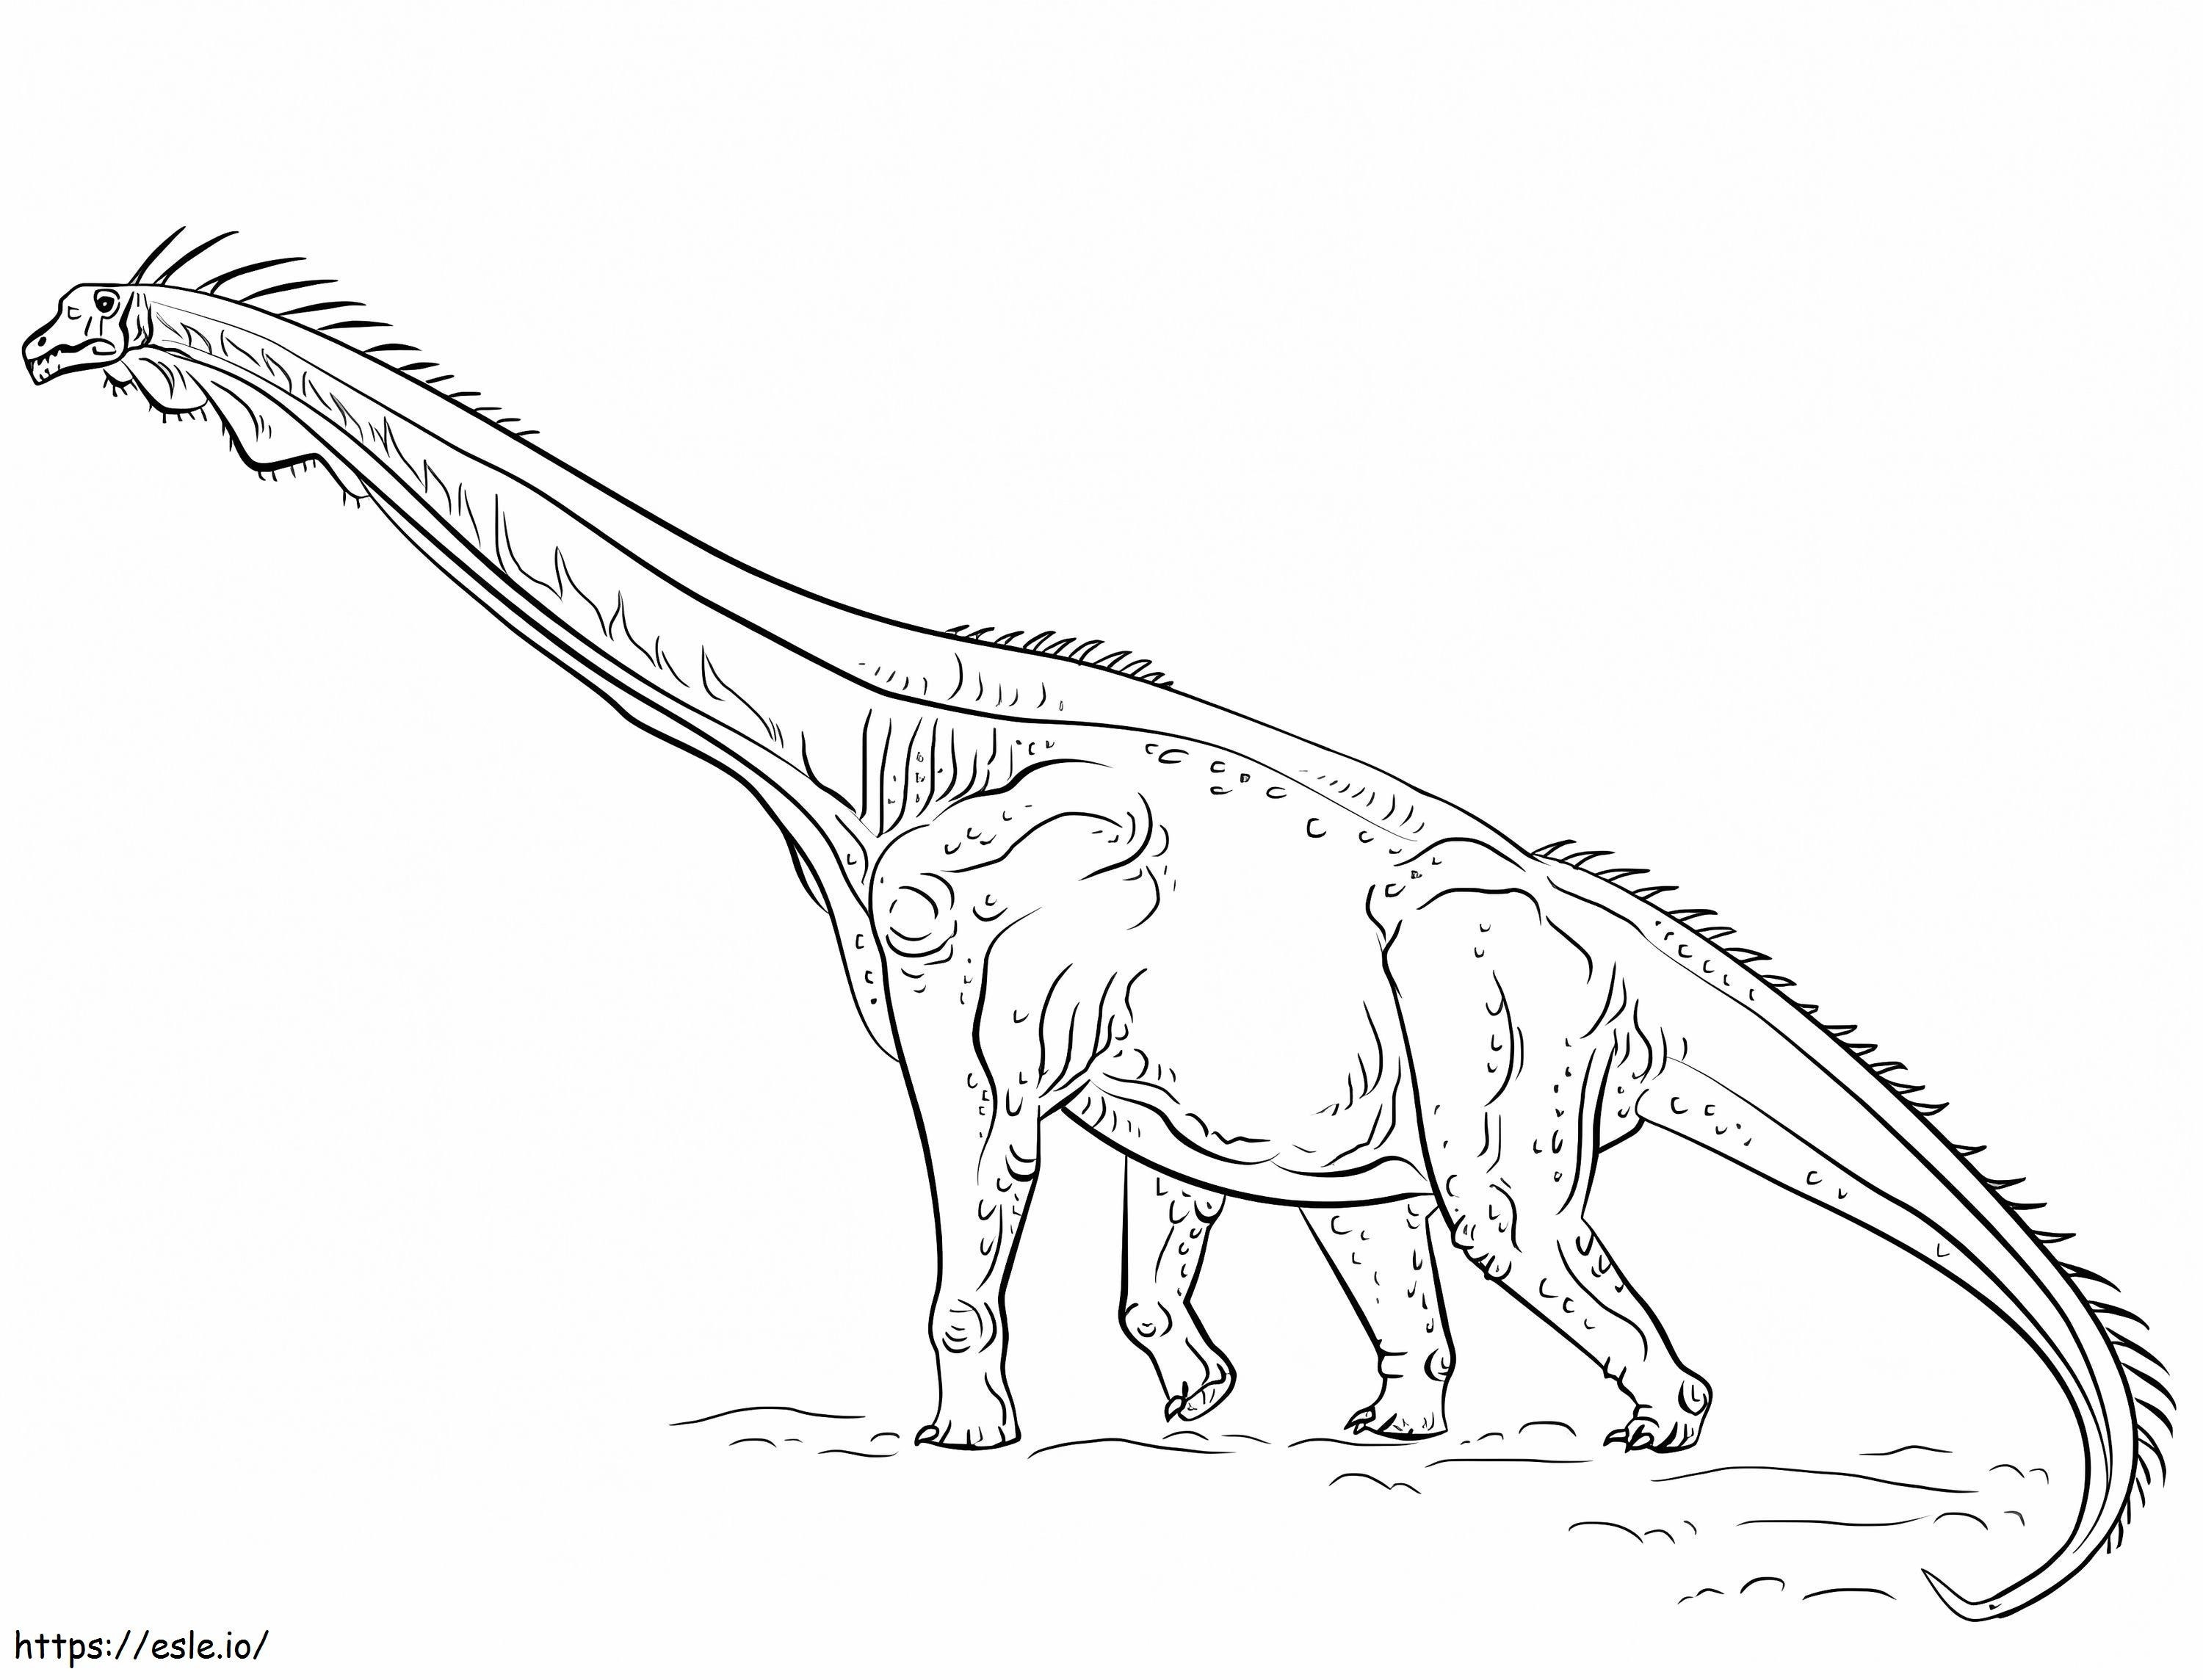 Brachiosaurus Walking coloring page